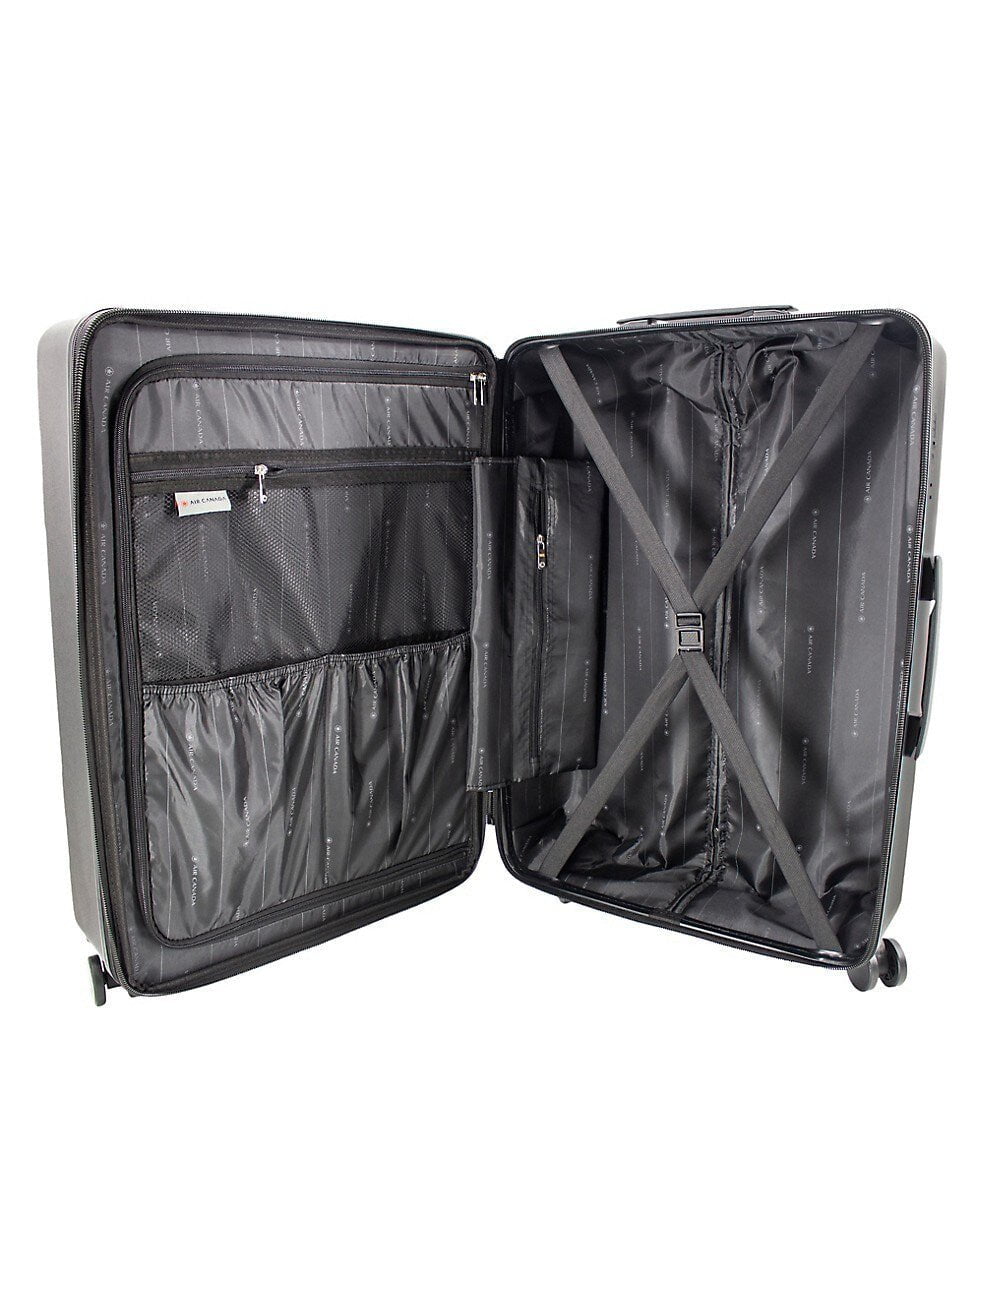 Air Canada Milan 3 Piece Hardside Expandable Luggage Set